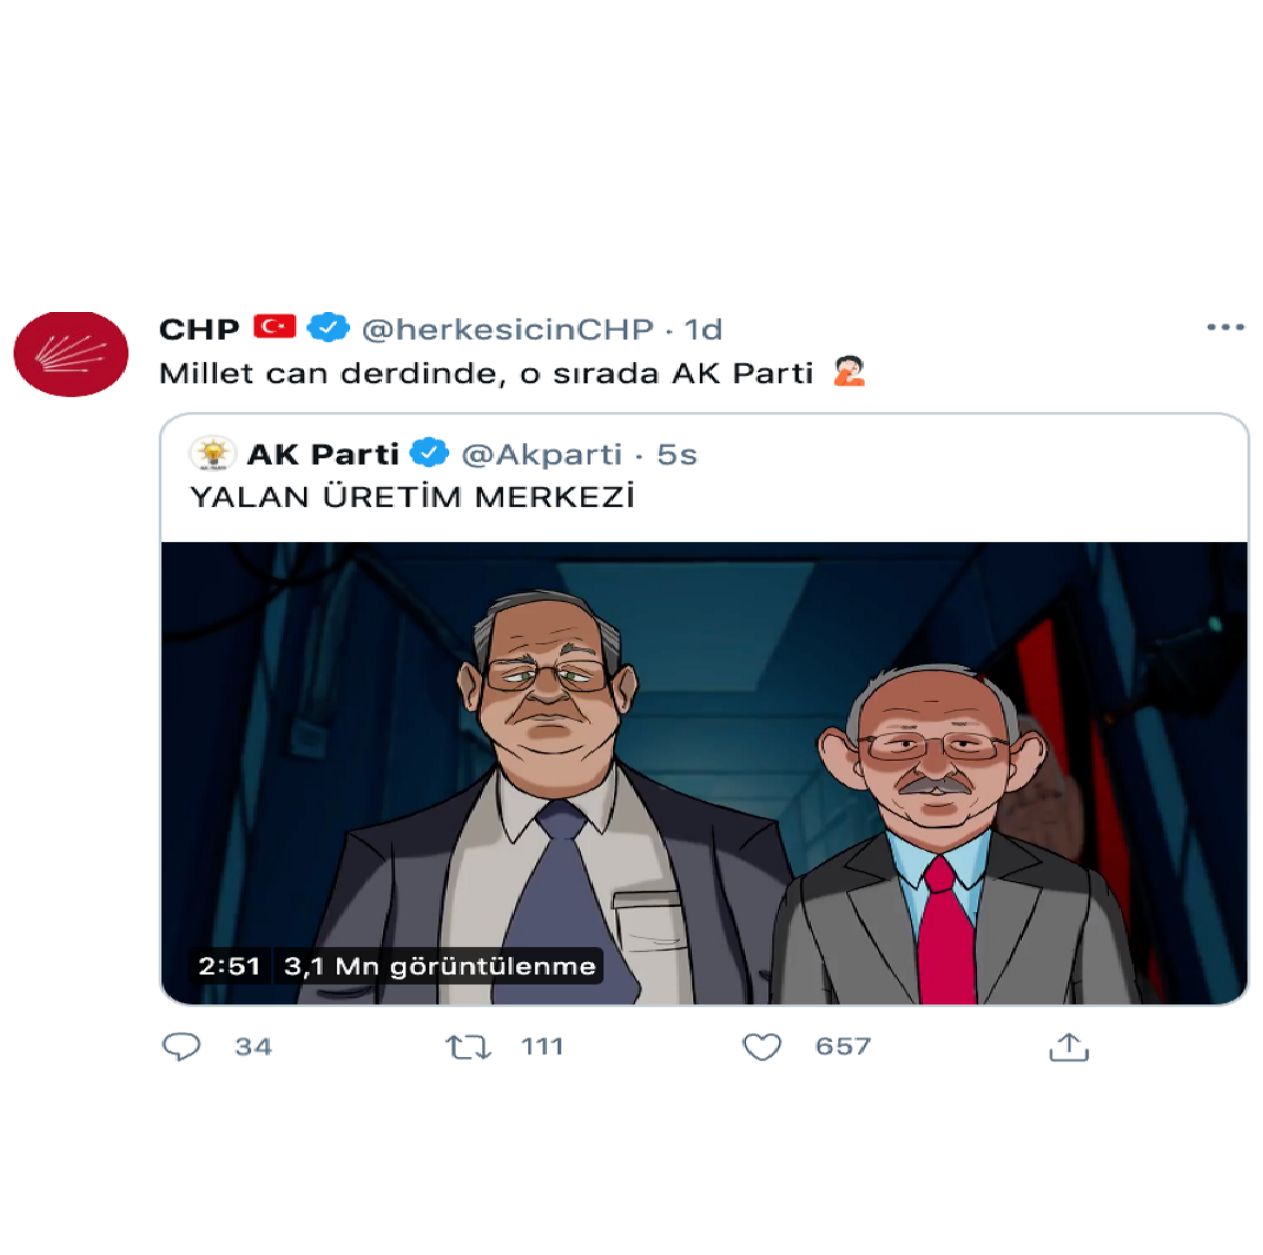 CHP'den AK Parti'nin çizgi filmli videosuna 'retweet' yapıldı!